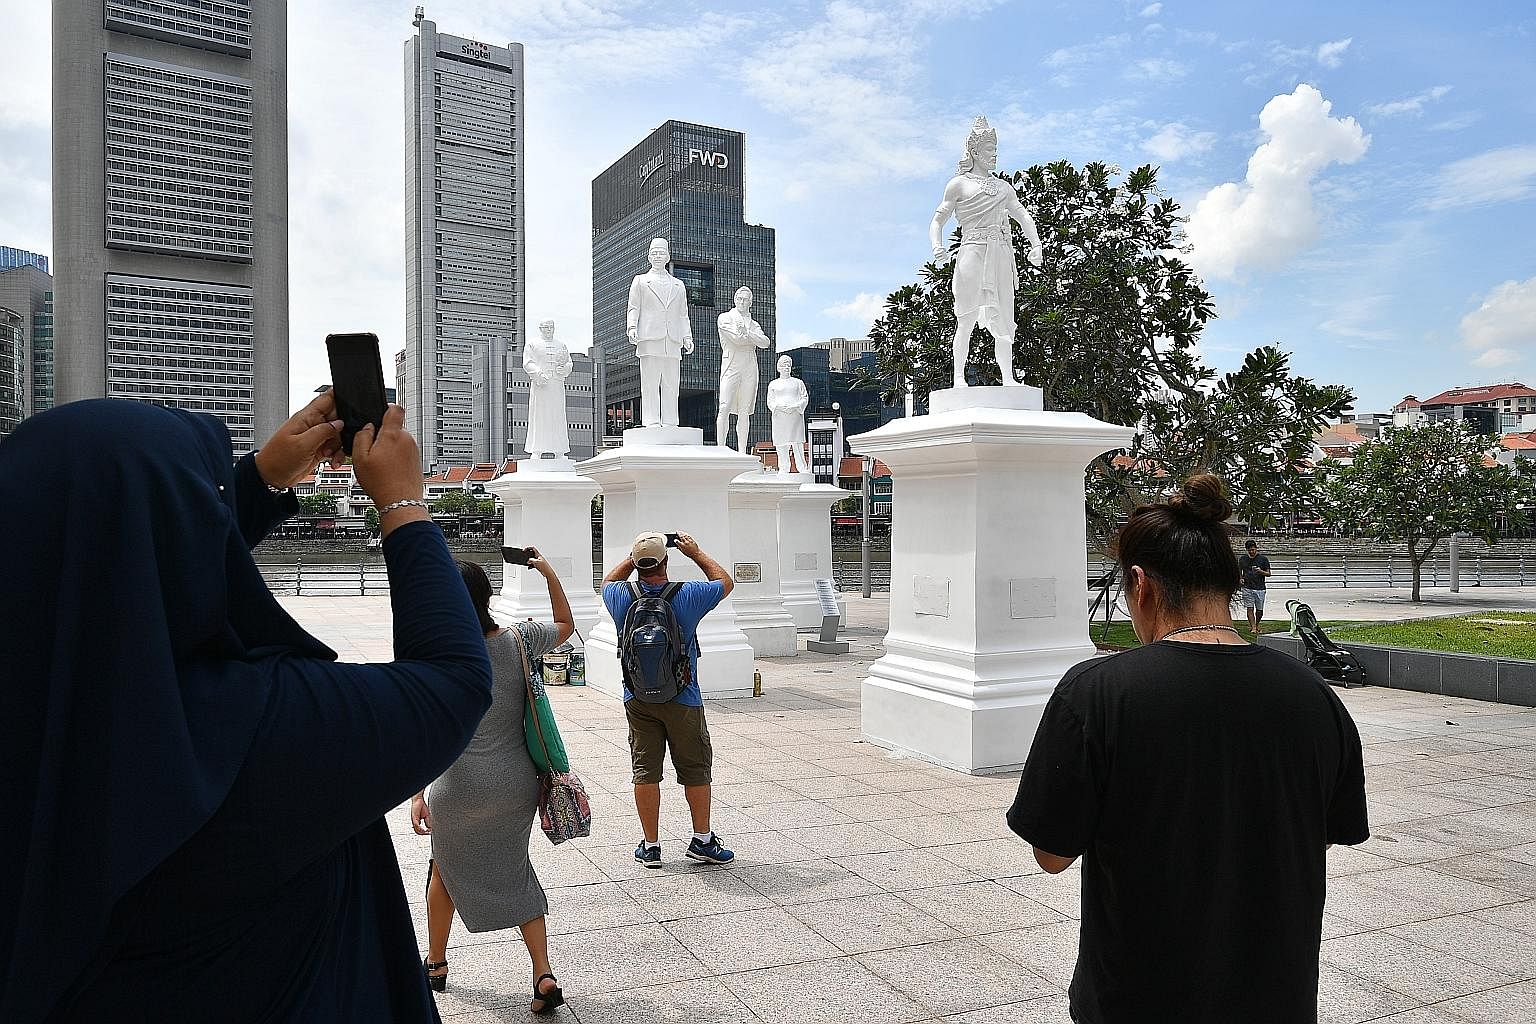 The statue of Sir Stamford Raffles (centre) by the Singapore River has been joined by (from left) community leader Tan Tock Seng, Raffles' secretary and interpreter Munshi Abdullah, treasury chief clerk Naraina Pillai and Sang Nila Utama.